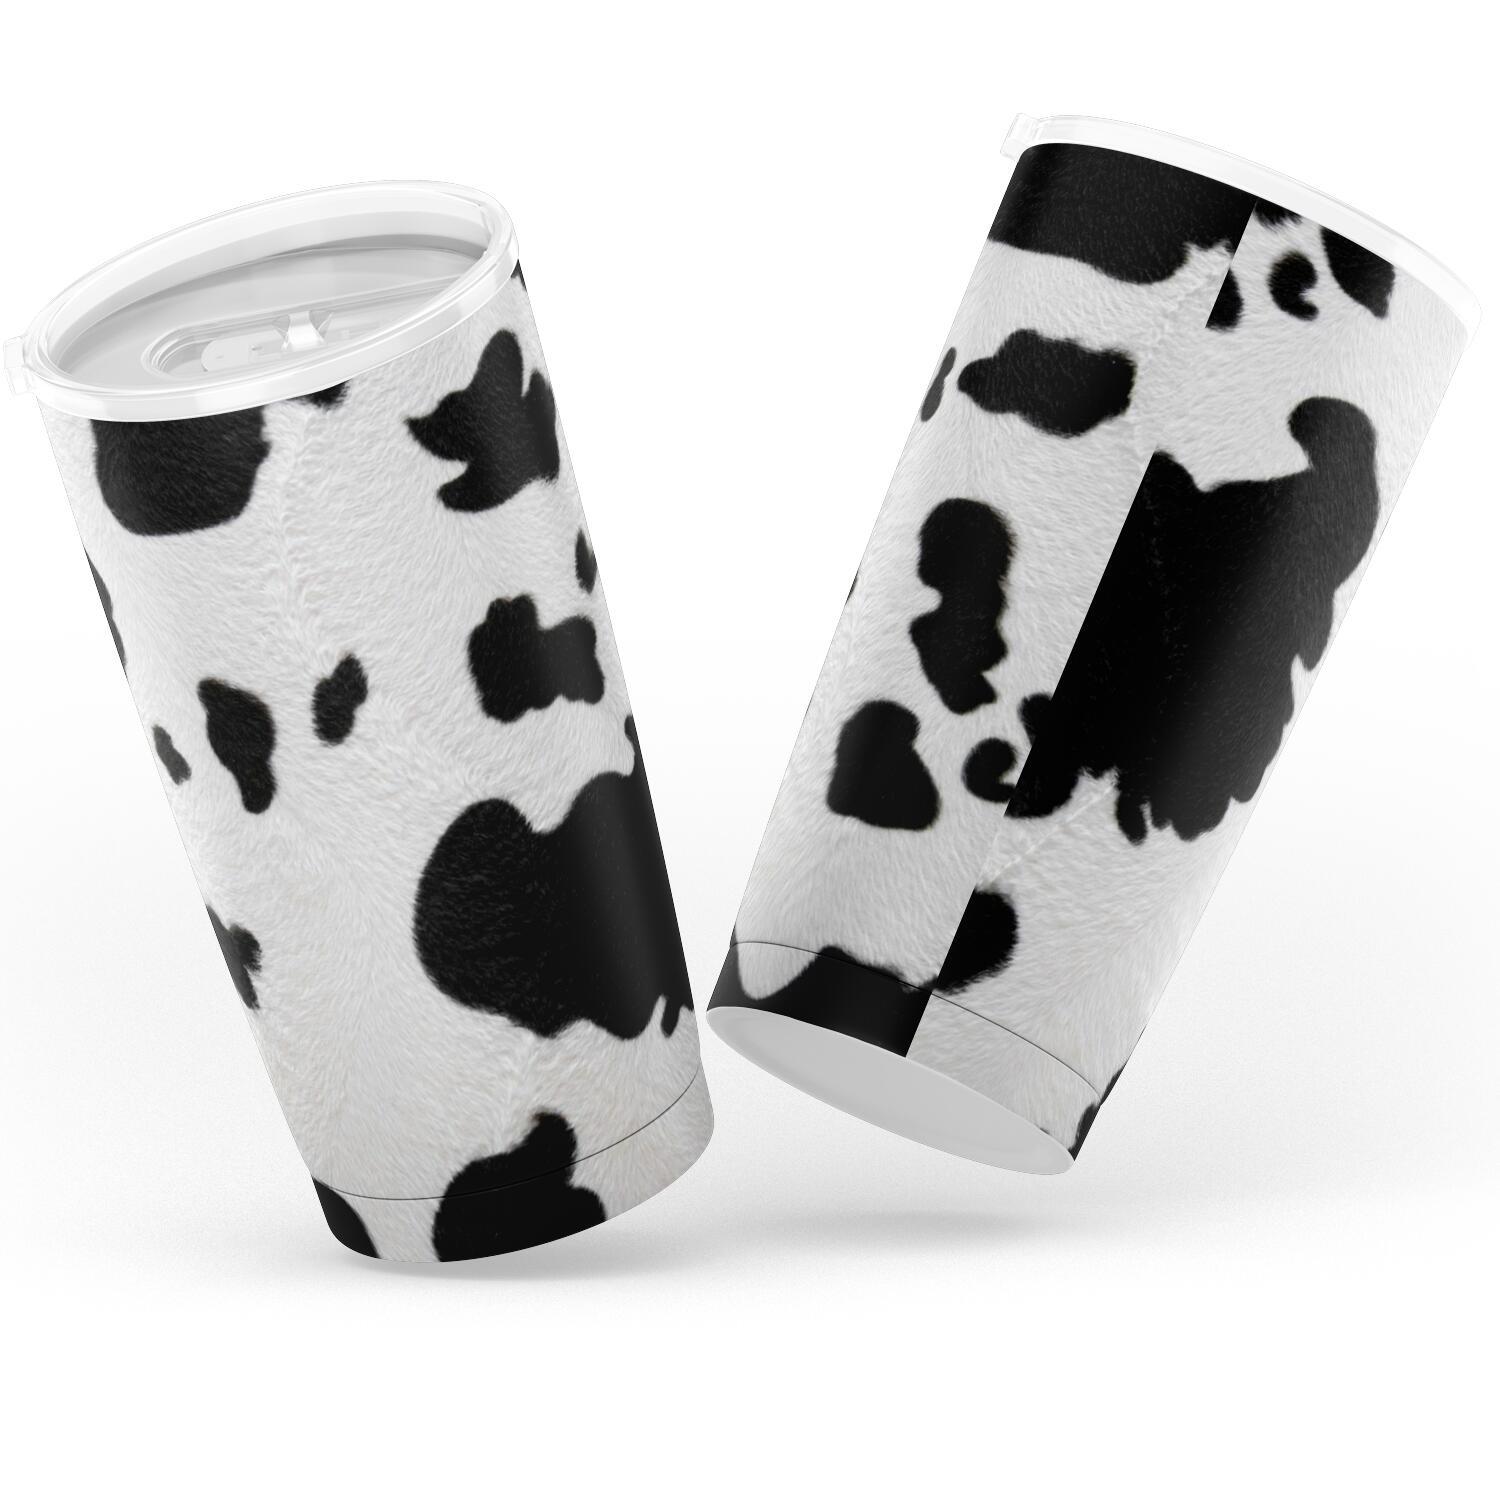 20oz tumbler aop realistic cow hide tumbler 3 - The Cow Print